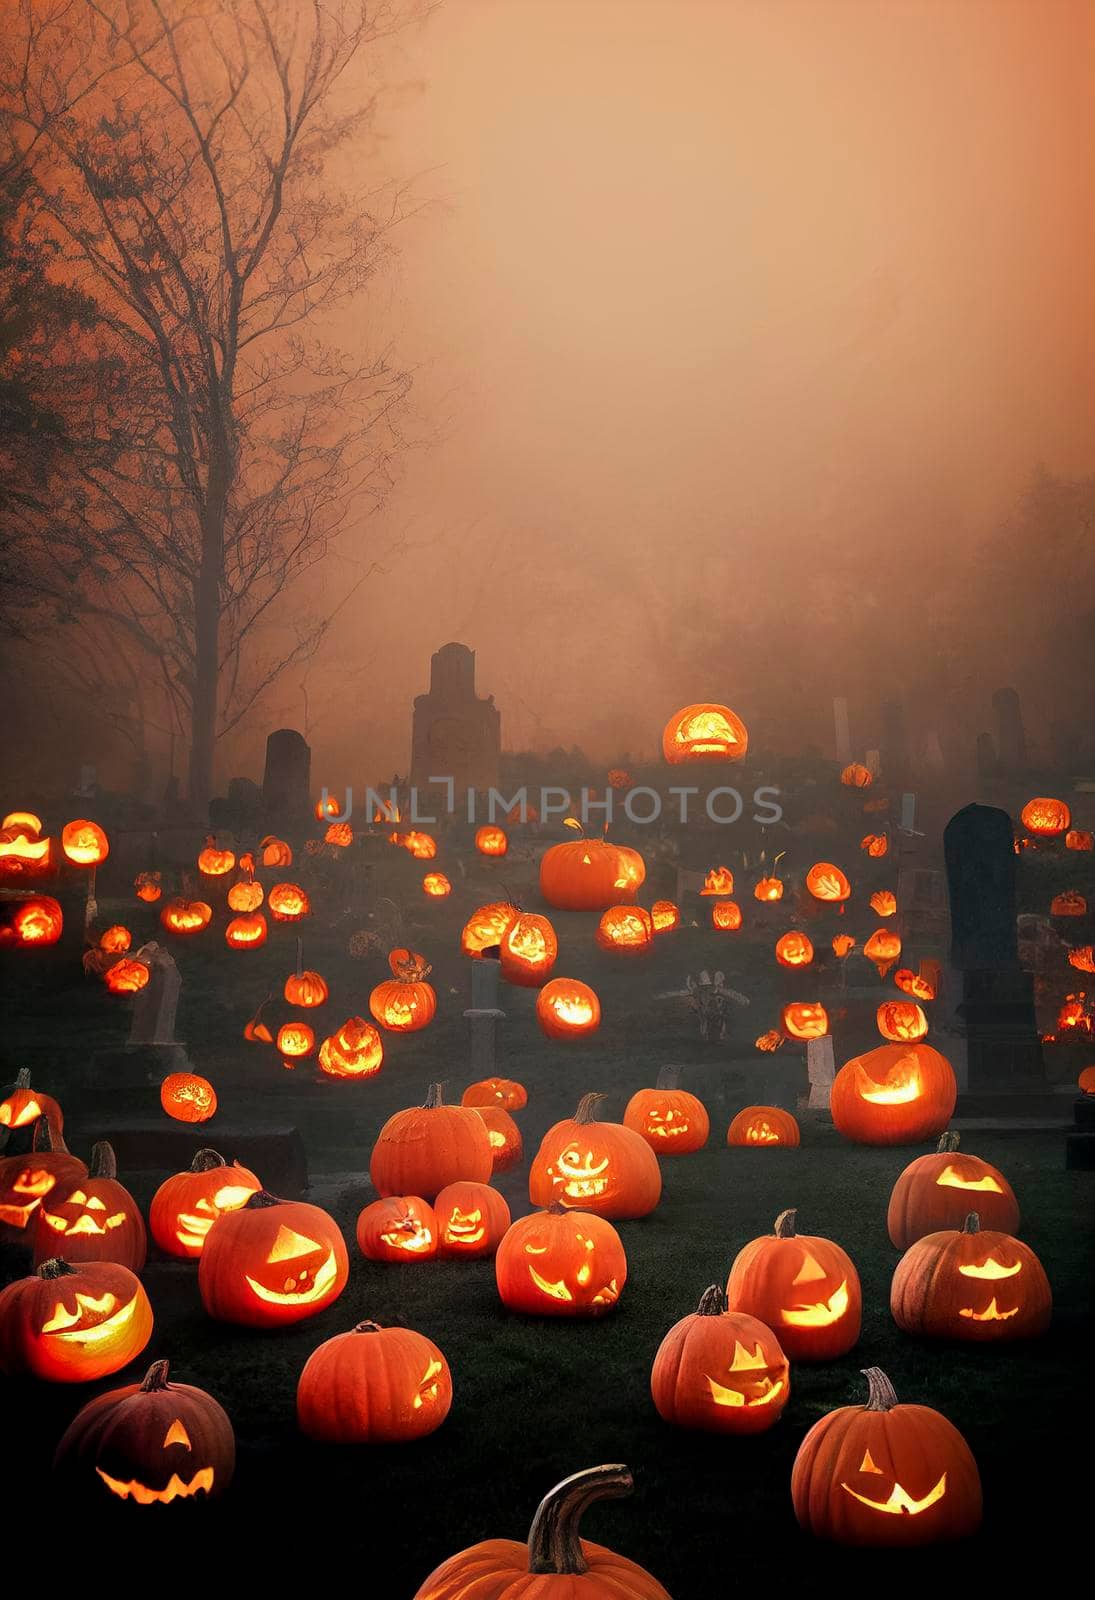 Halloween pumpkin head jack lantern with burning candles. Pumpkins in graveyard in the spooky night - halloween backdrop. by jbruiz78